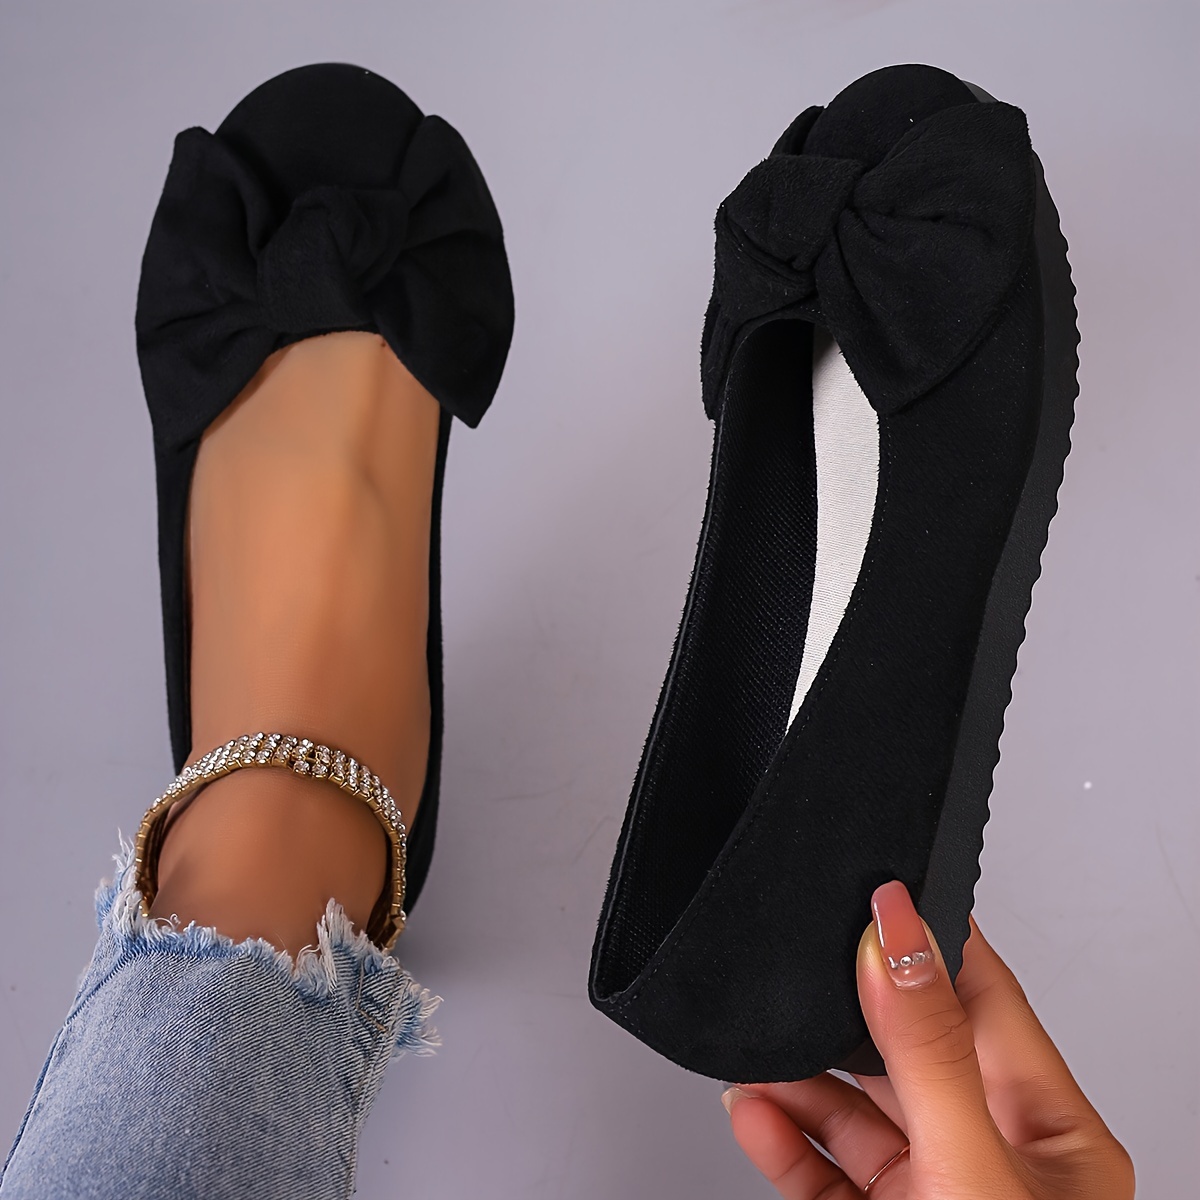  Women's Sandals Women's Bow Flat Sandals, Comfort